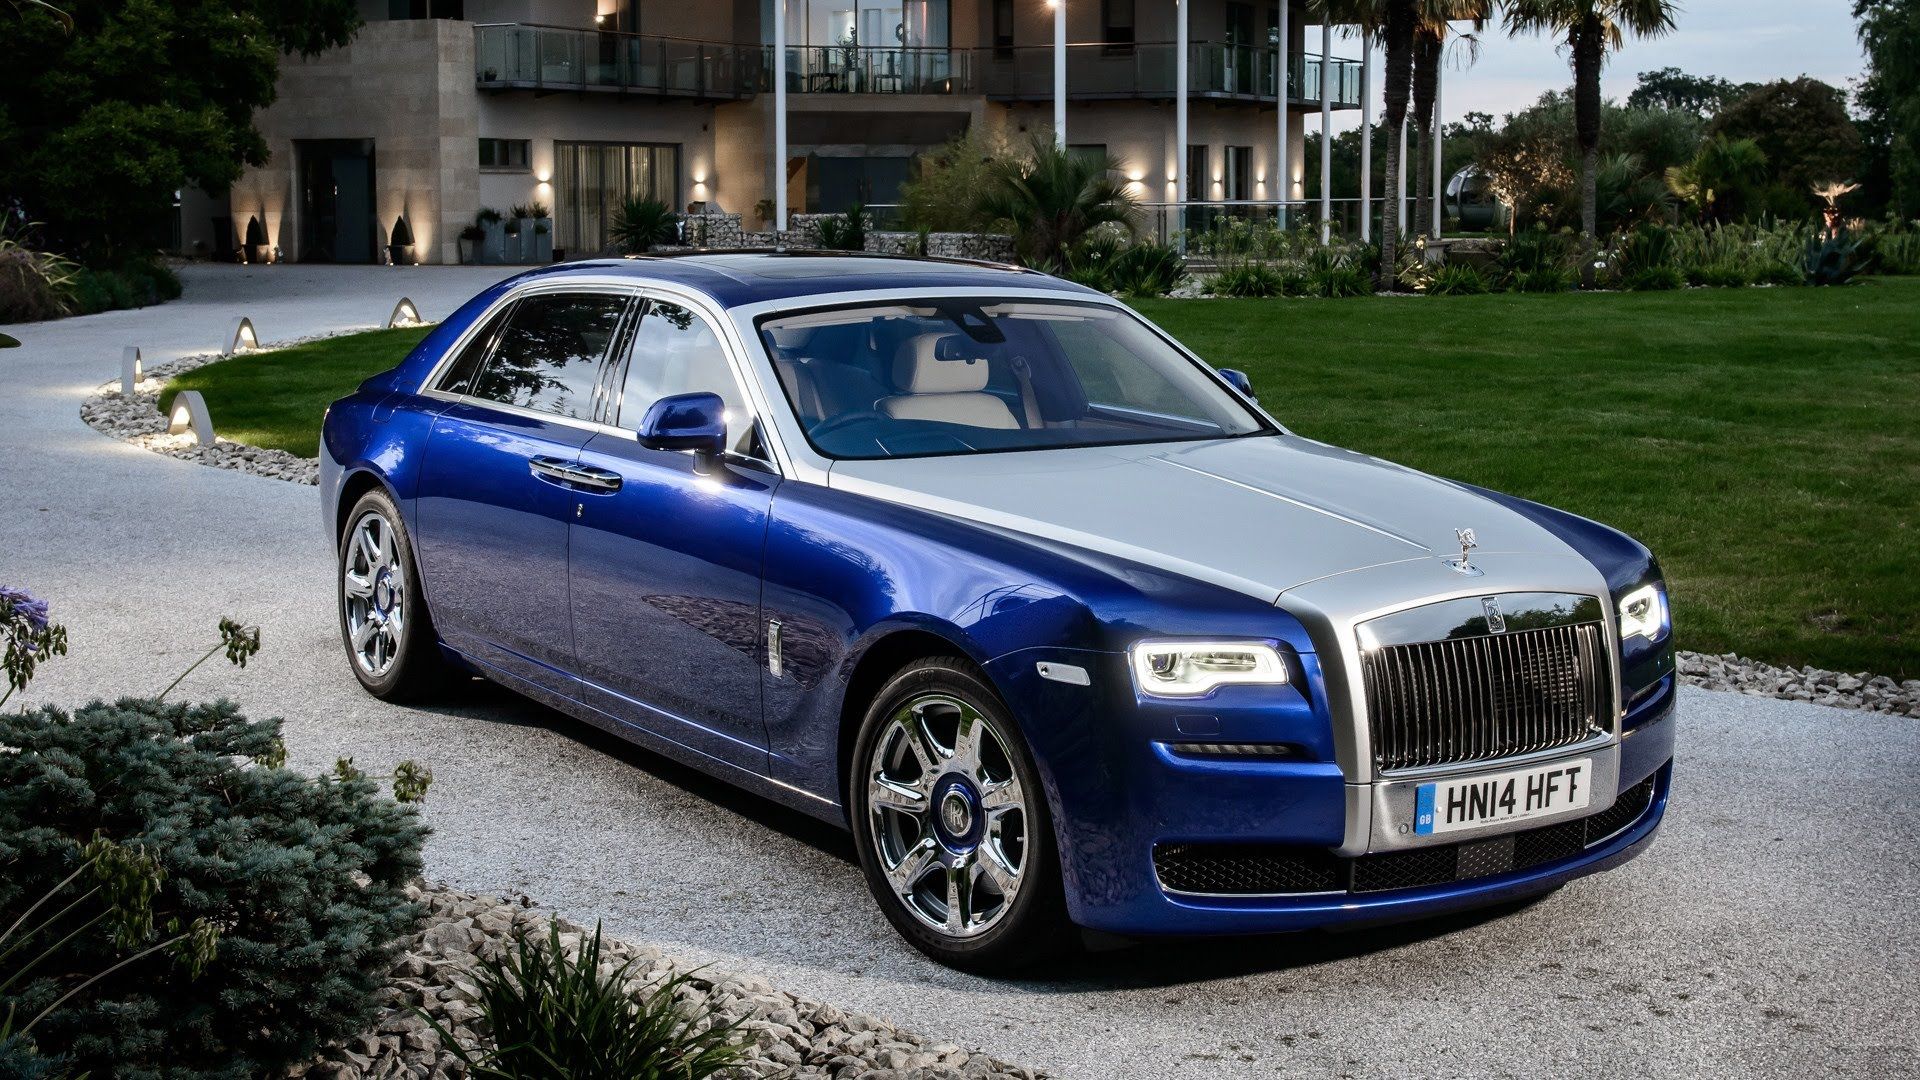 Rolls Royce Ghost Series II gets What Car? Award